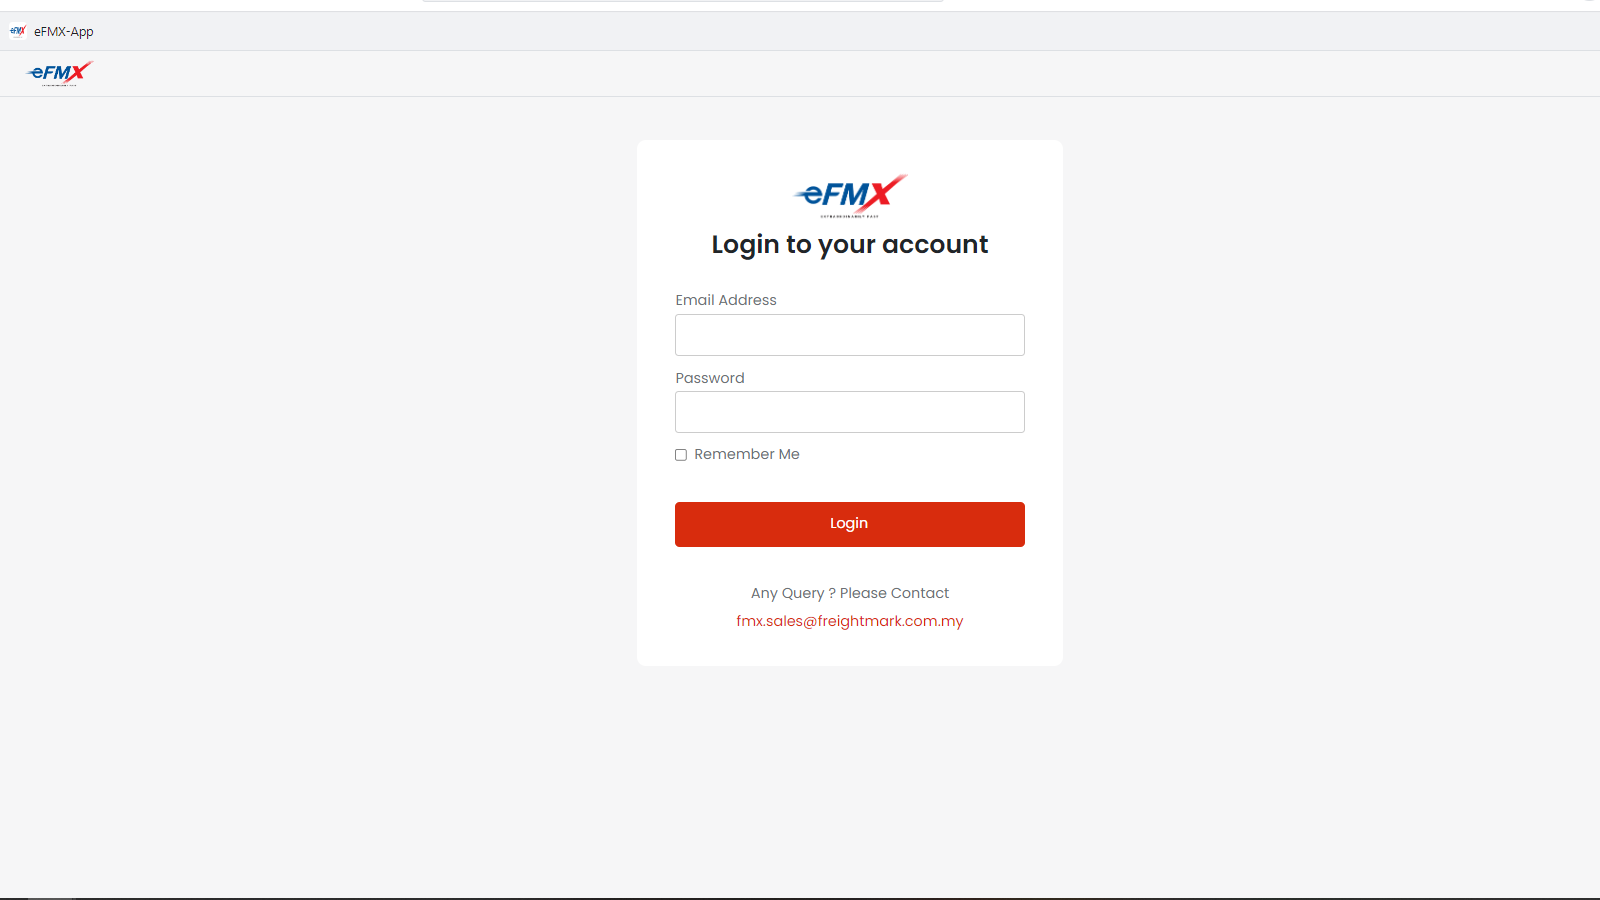 login with eFMX credentials